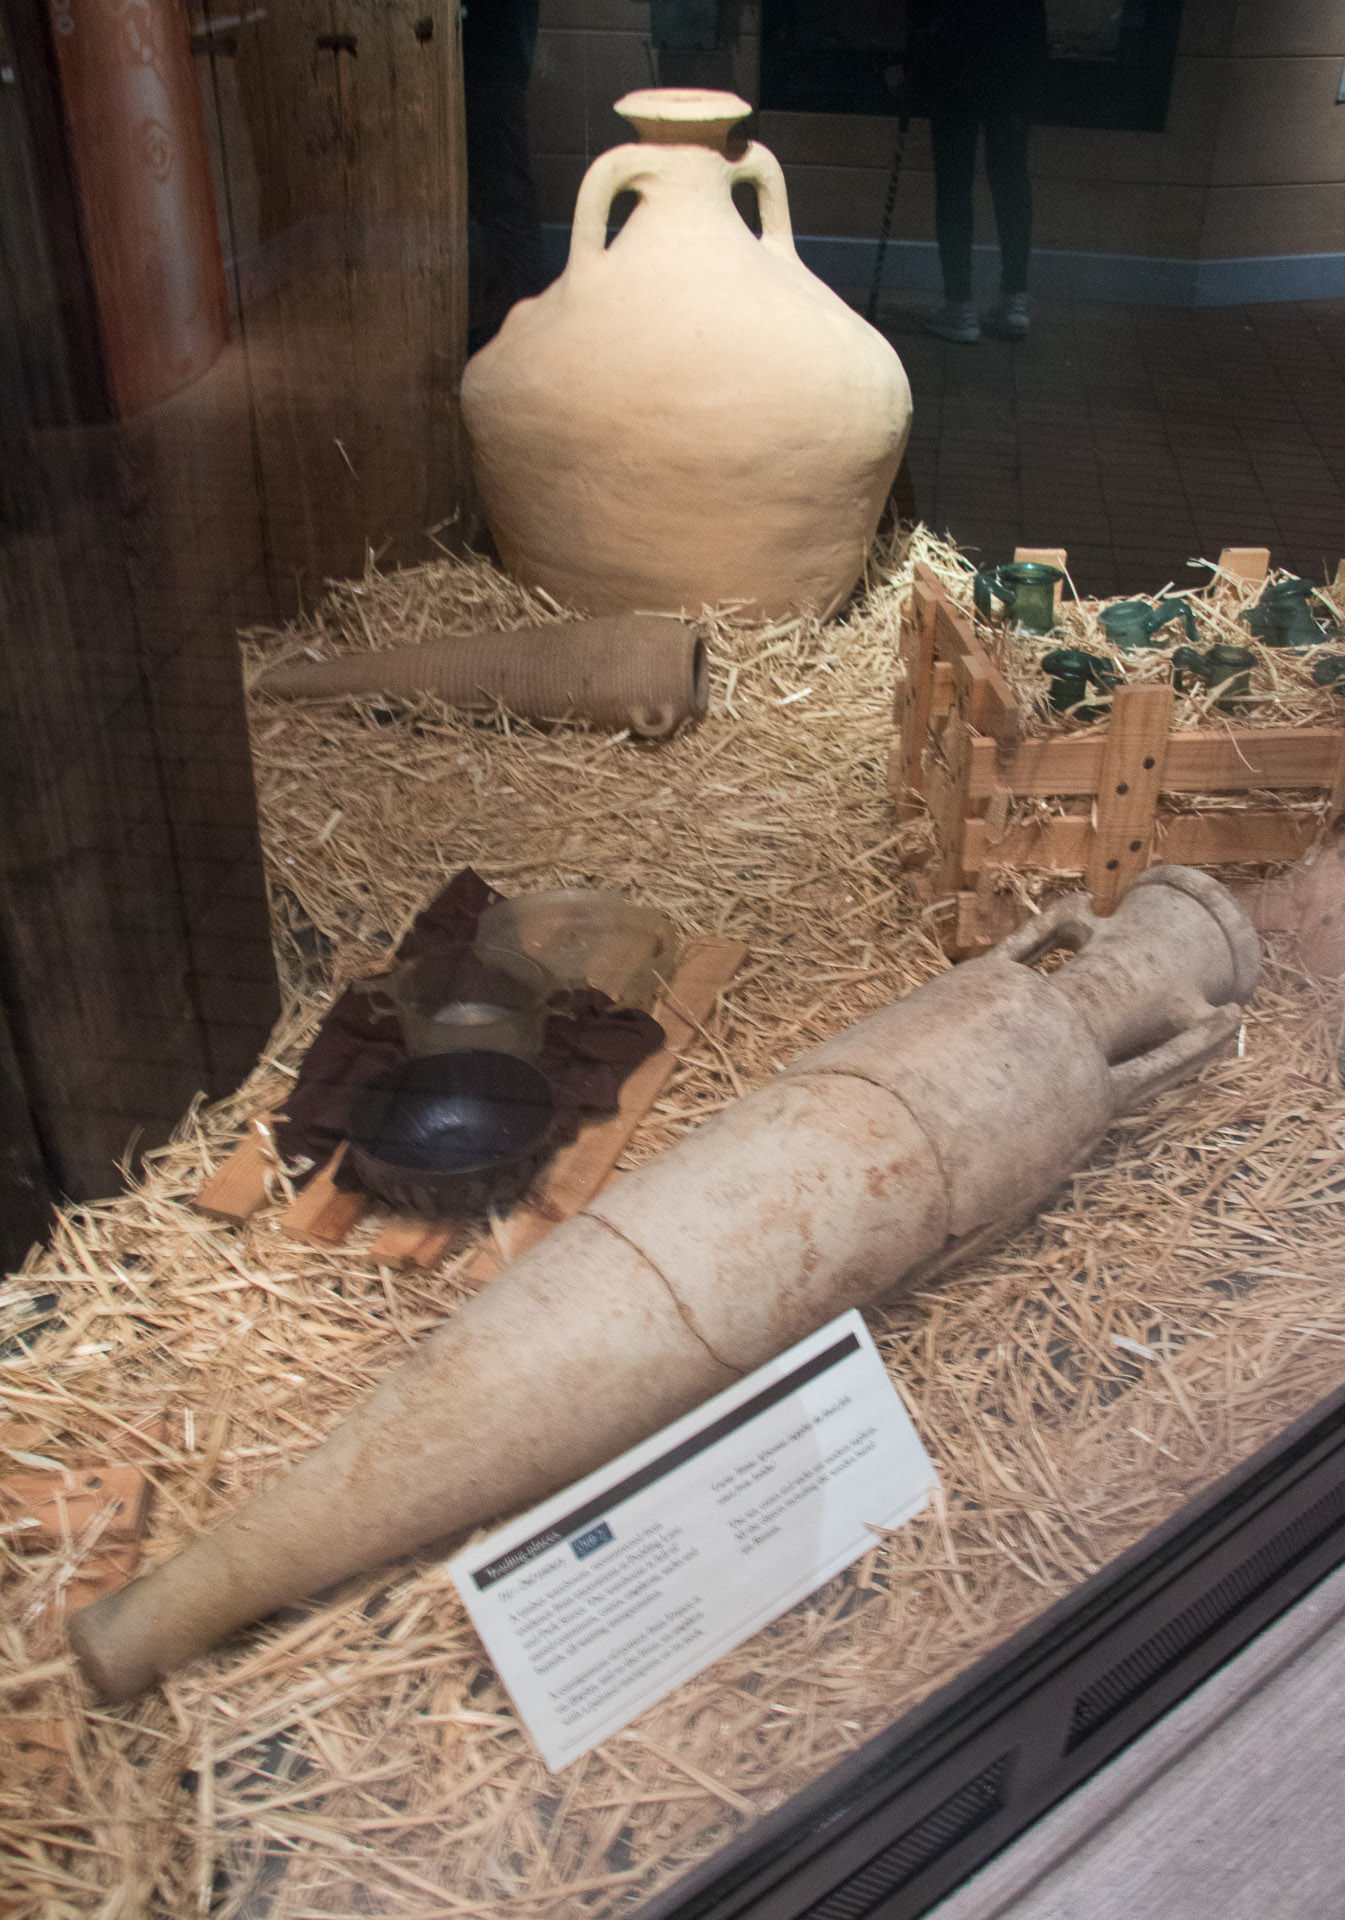 Roman amphorae at the Museum of London